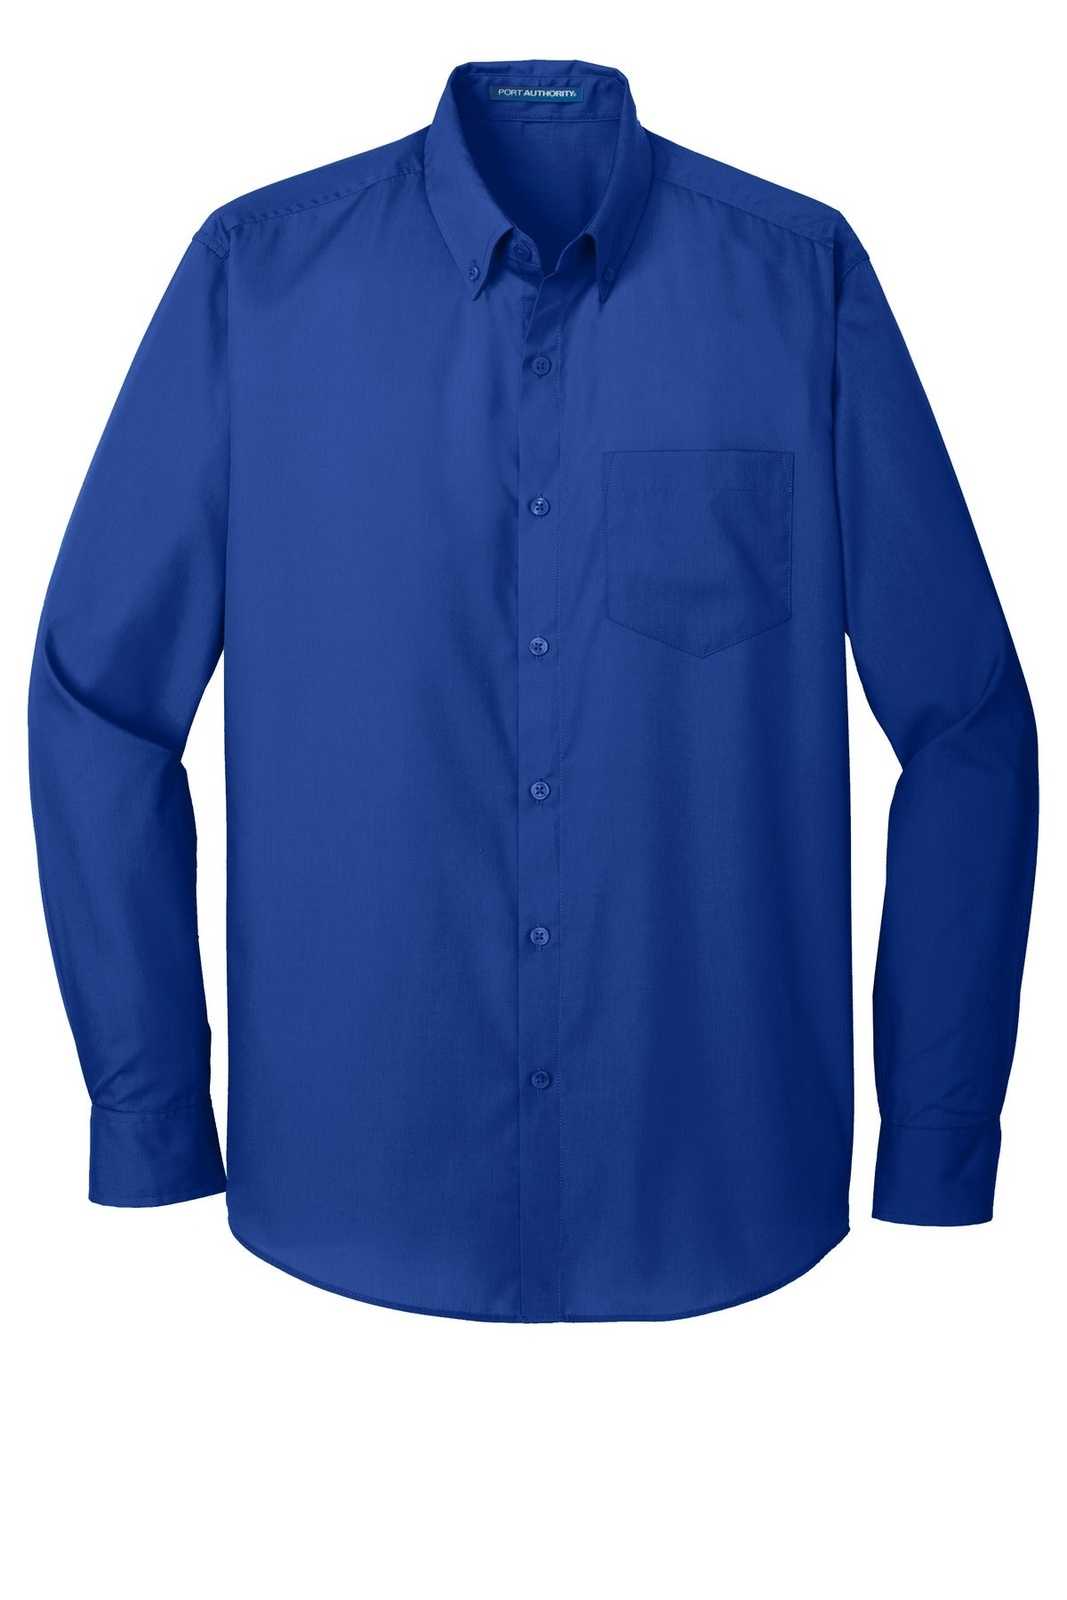 Port Authority W100 Long Sleeve Carefree Poplin Shirt - True Royal - HIT a Double - 5